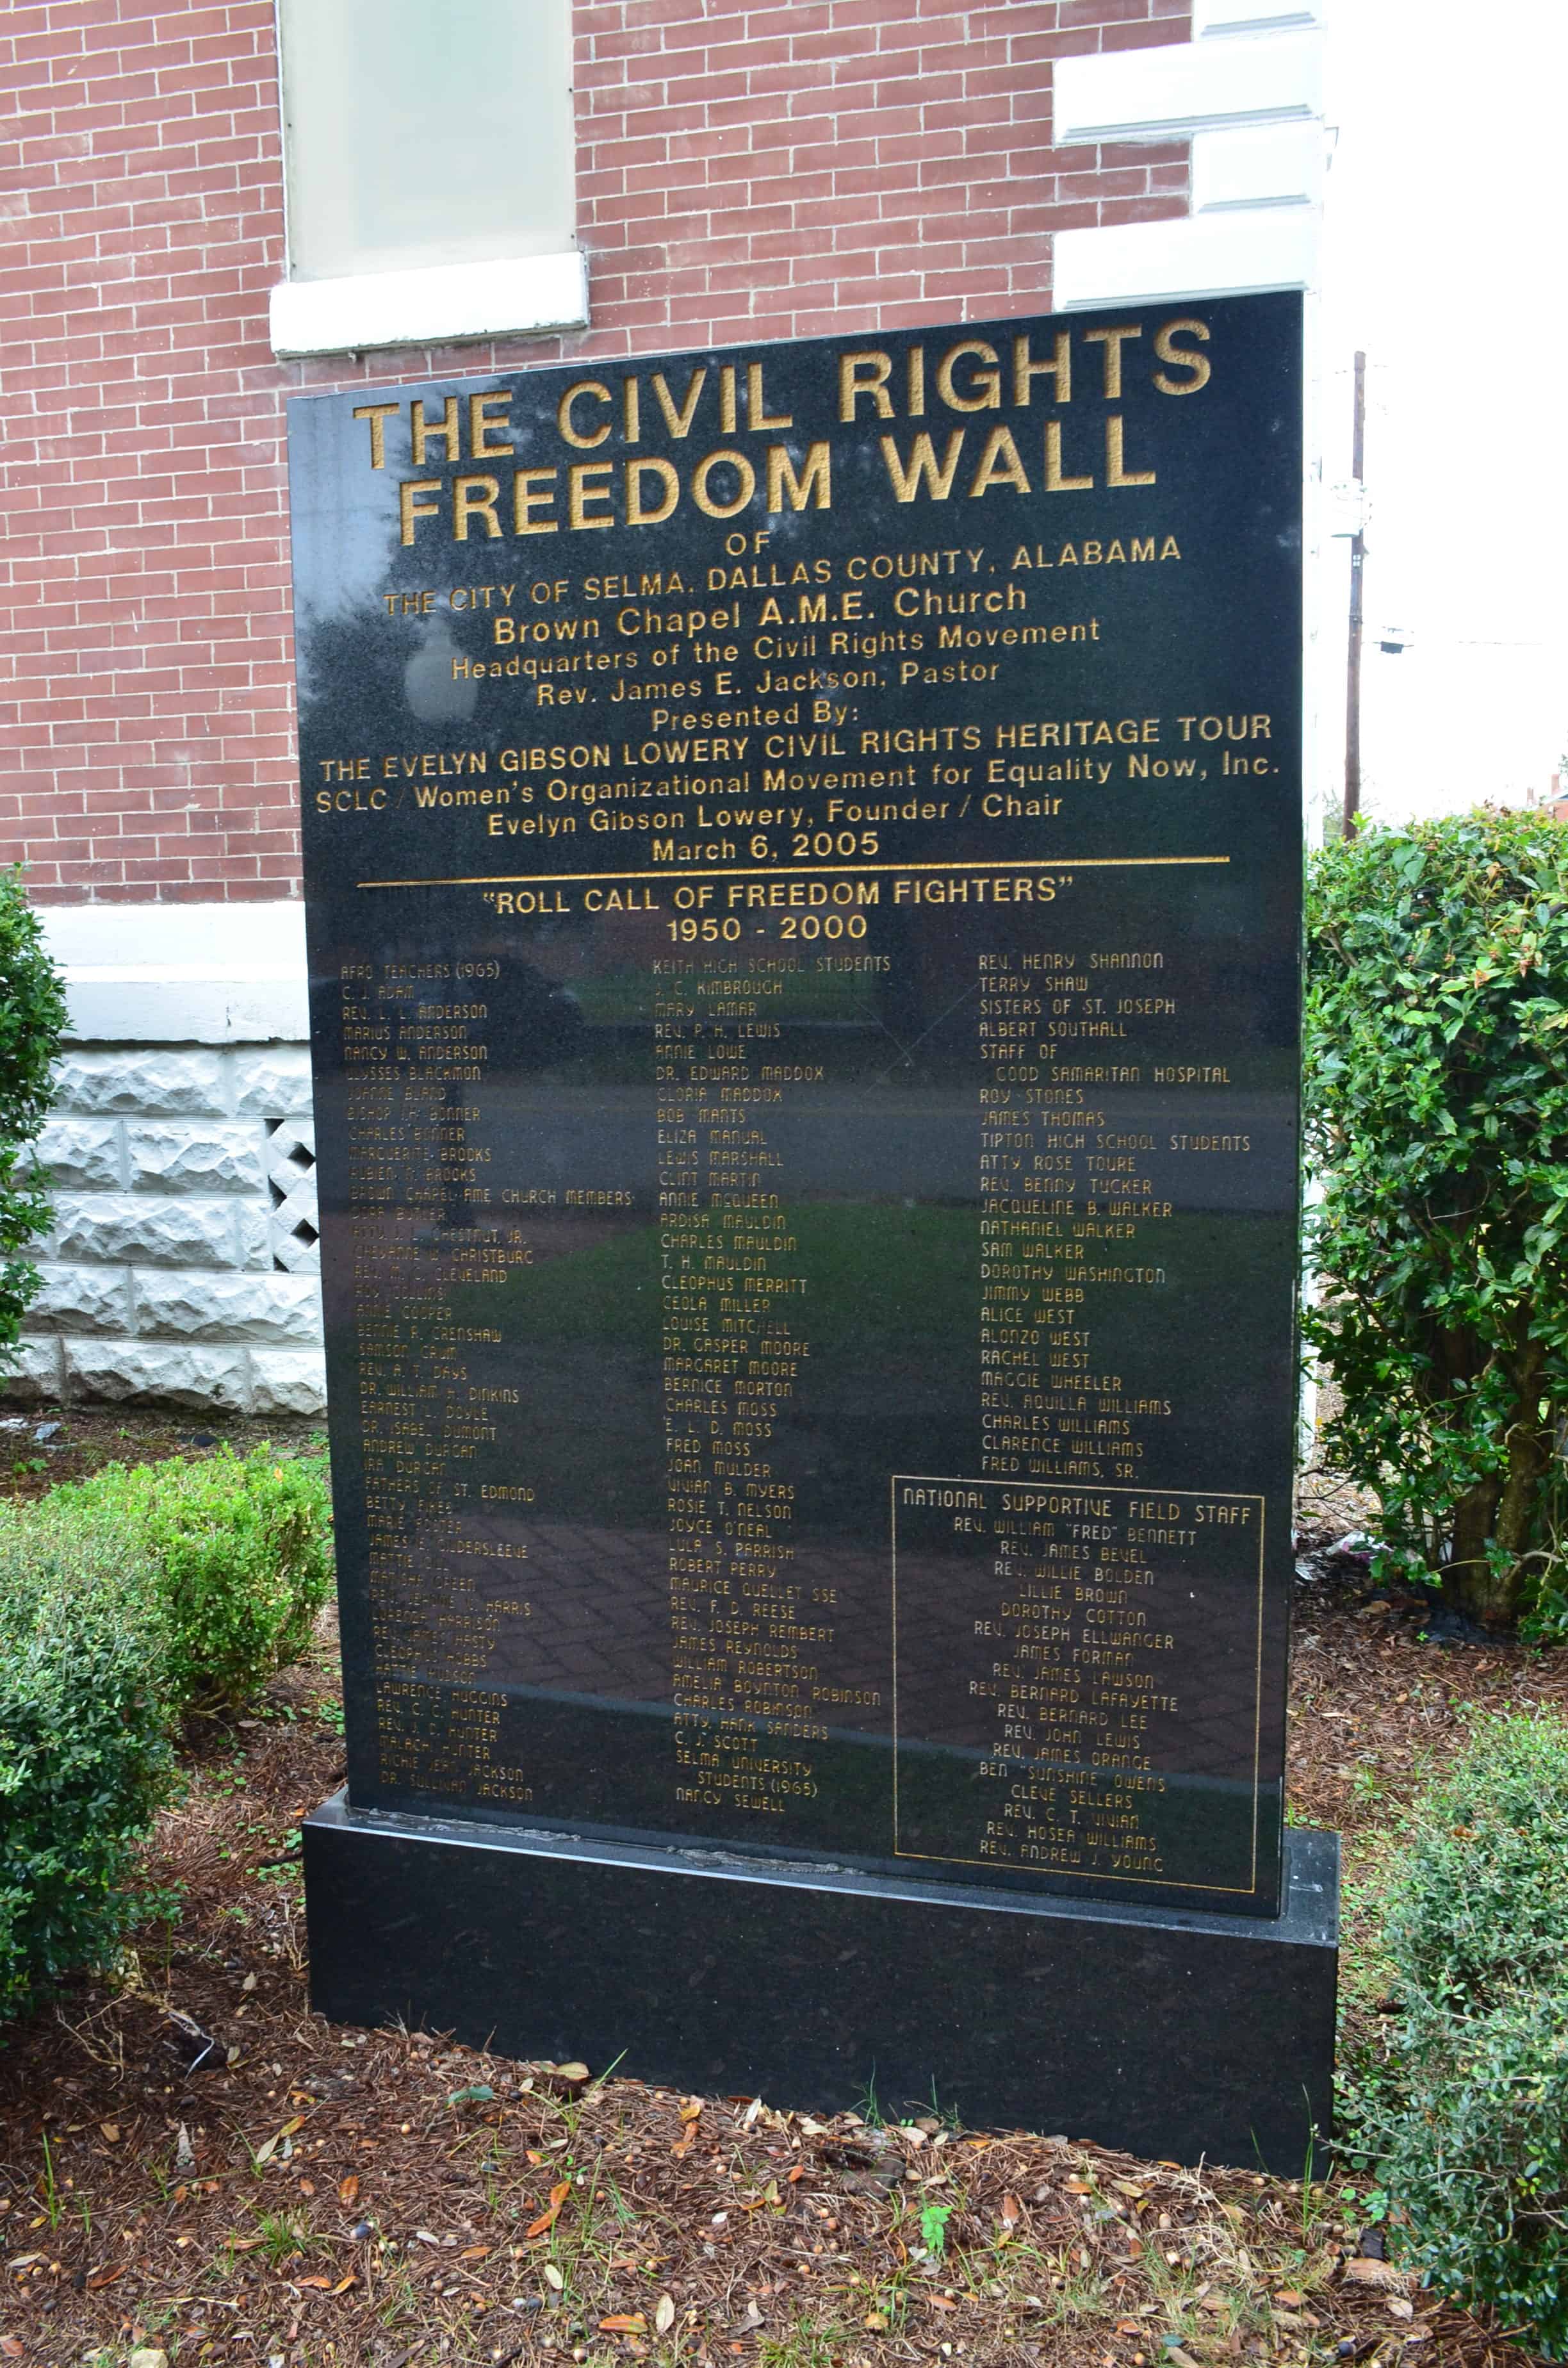 Civil Rights Freedom Wall at Brown Chapel A.M.E. Church in Selma, Alabama